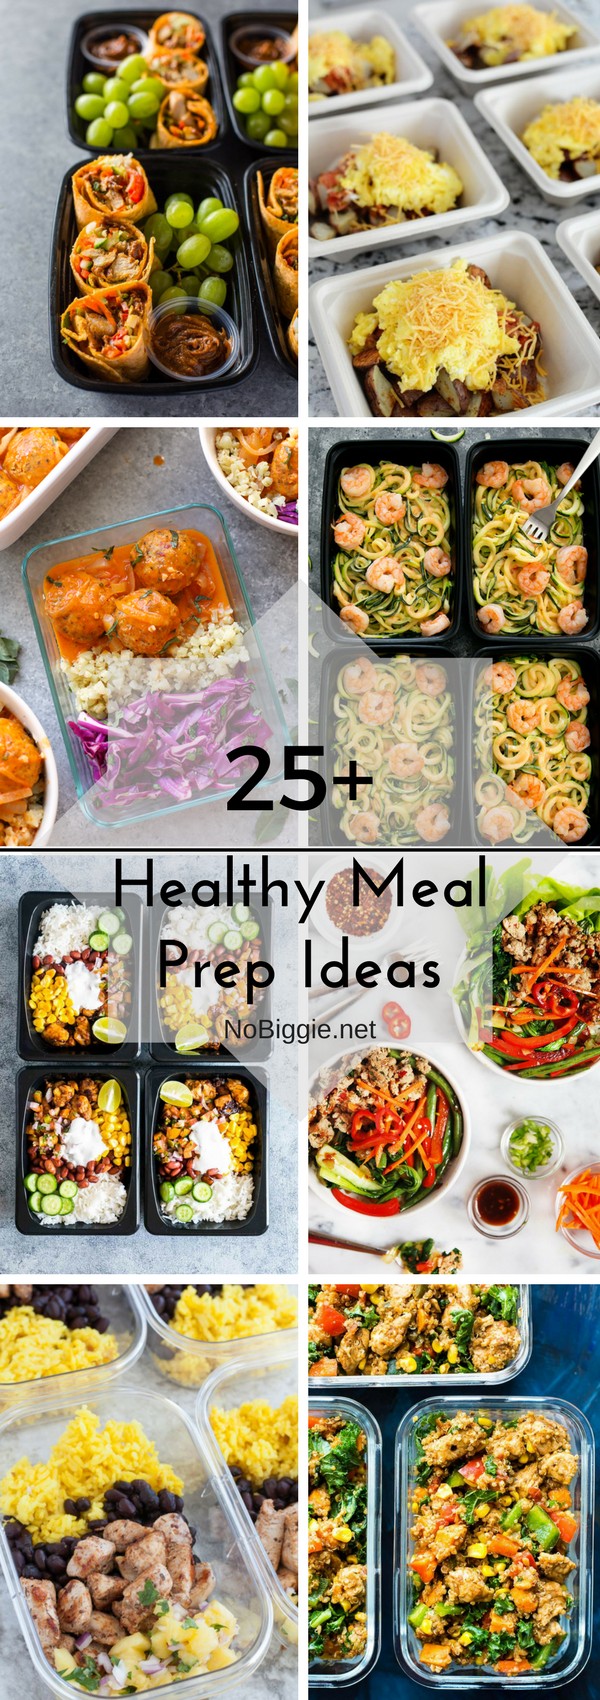 https://www.nobiggie.net/wp-content/uploads/2017/05/25-healthy-meal-prep-ideas-NoBiggie.net_.png